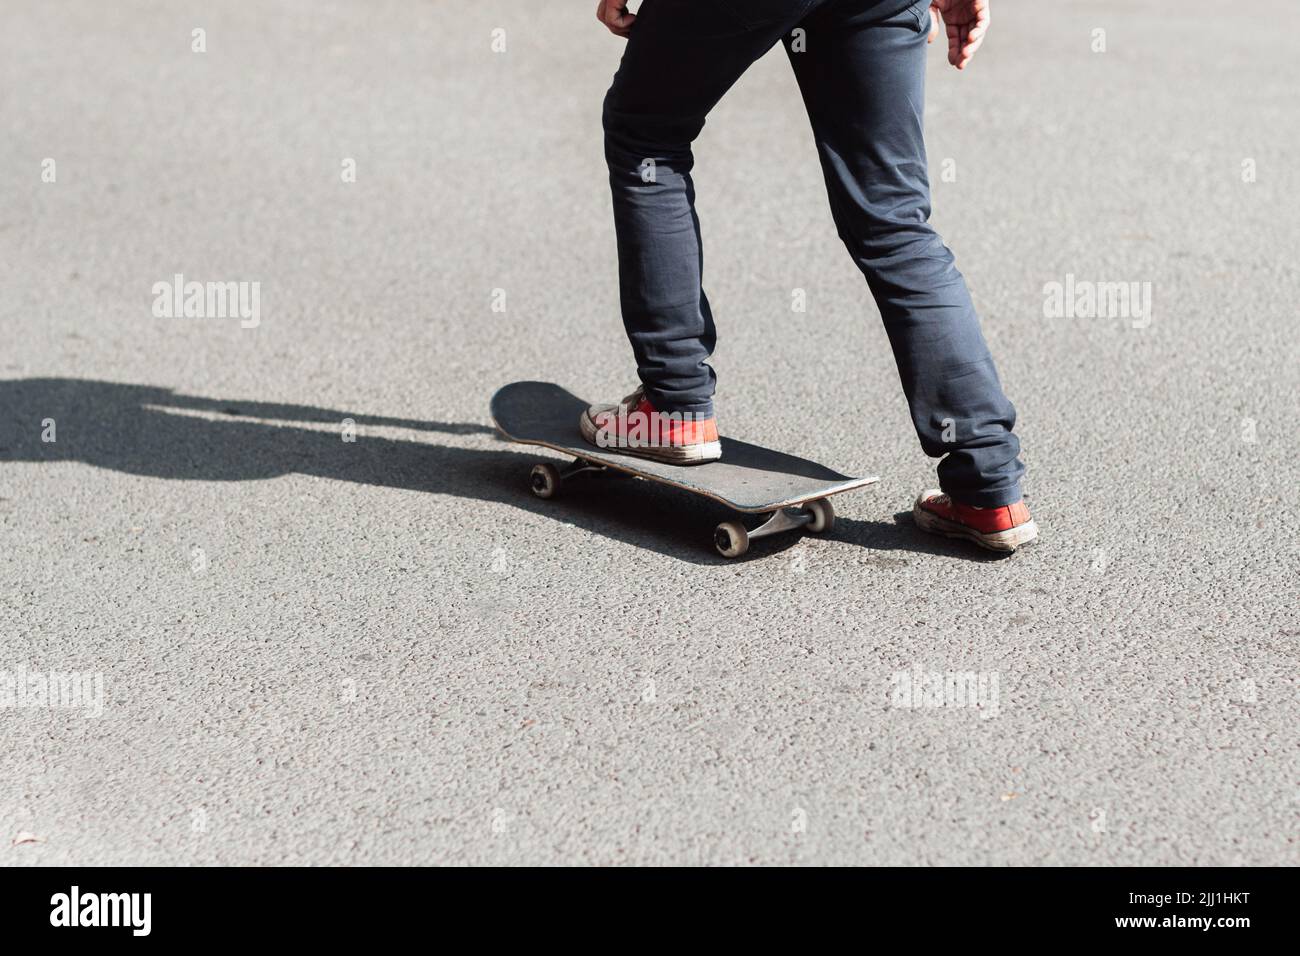 Professional sport. Skateboarding motivation Stock Photo